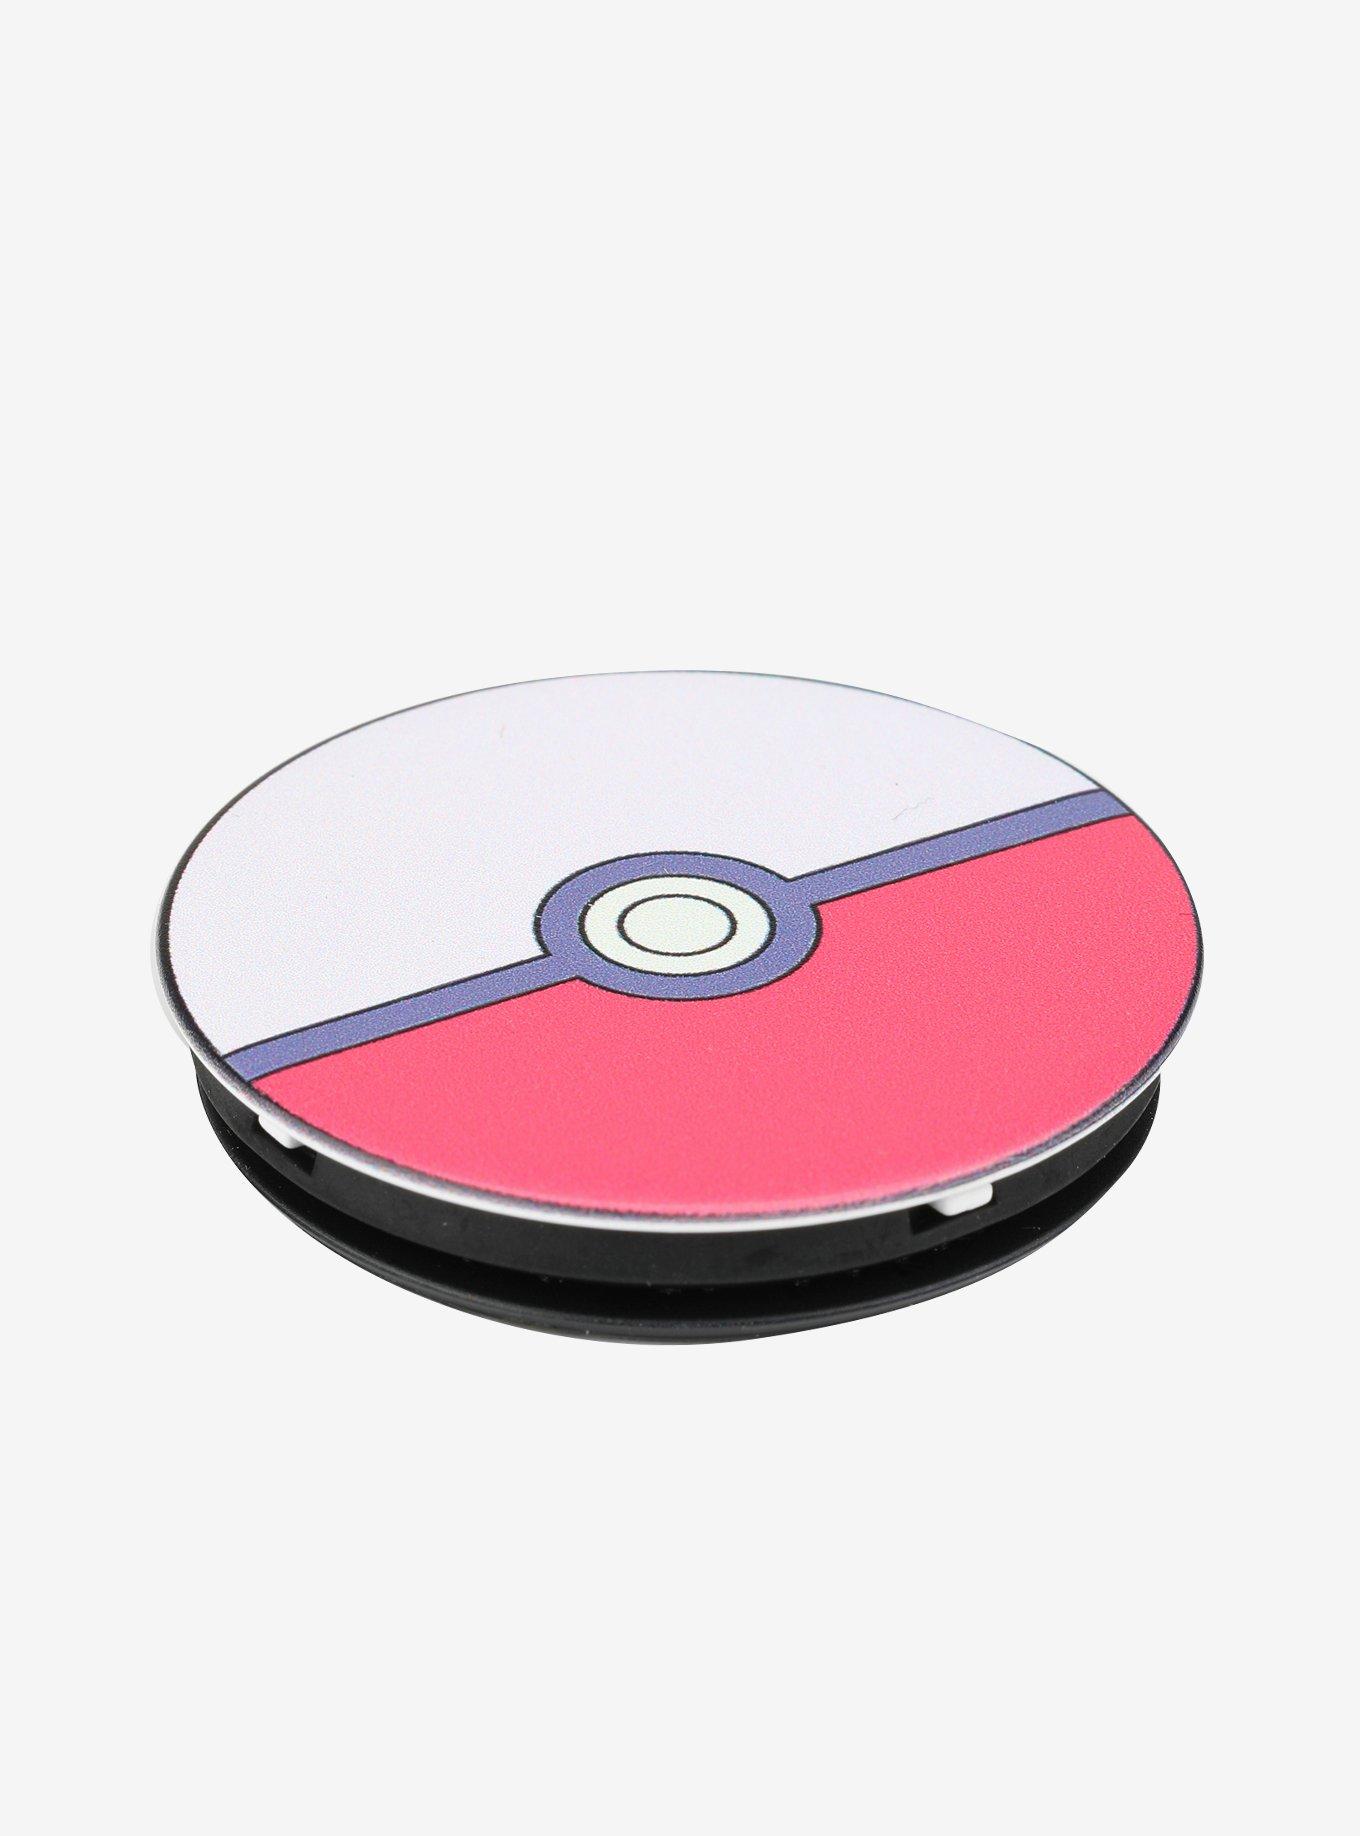 PopSockets Pokemon Poke Ball Phone Grip & Stand, , alternate